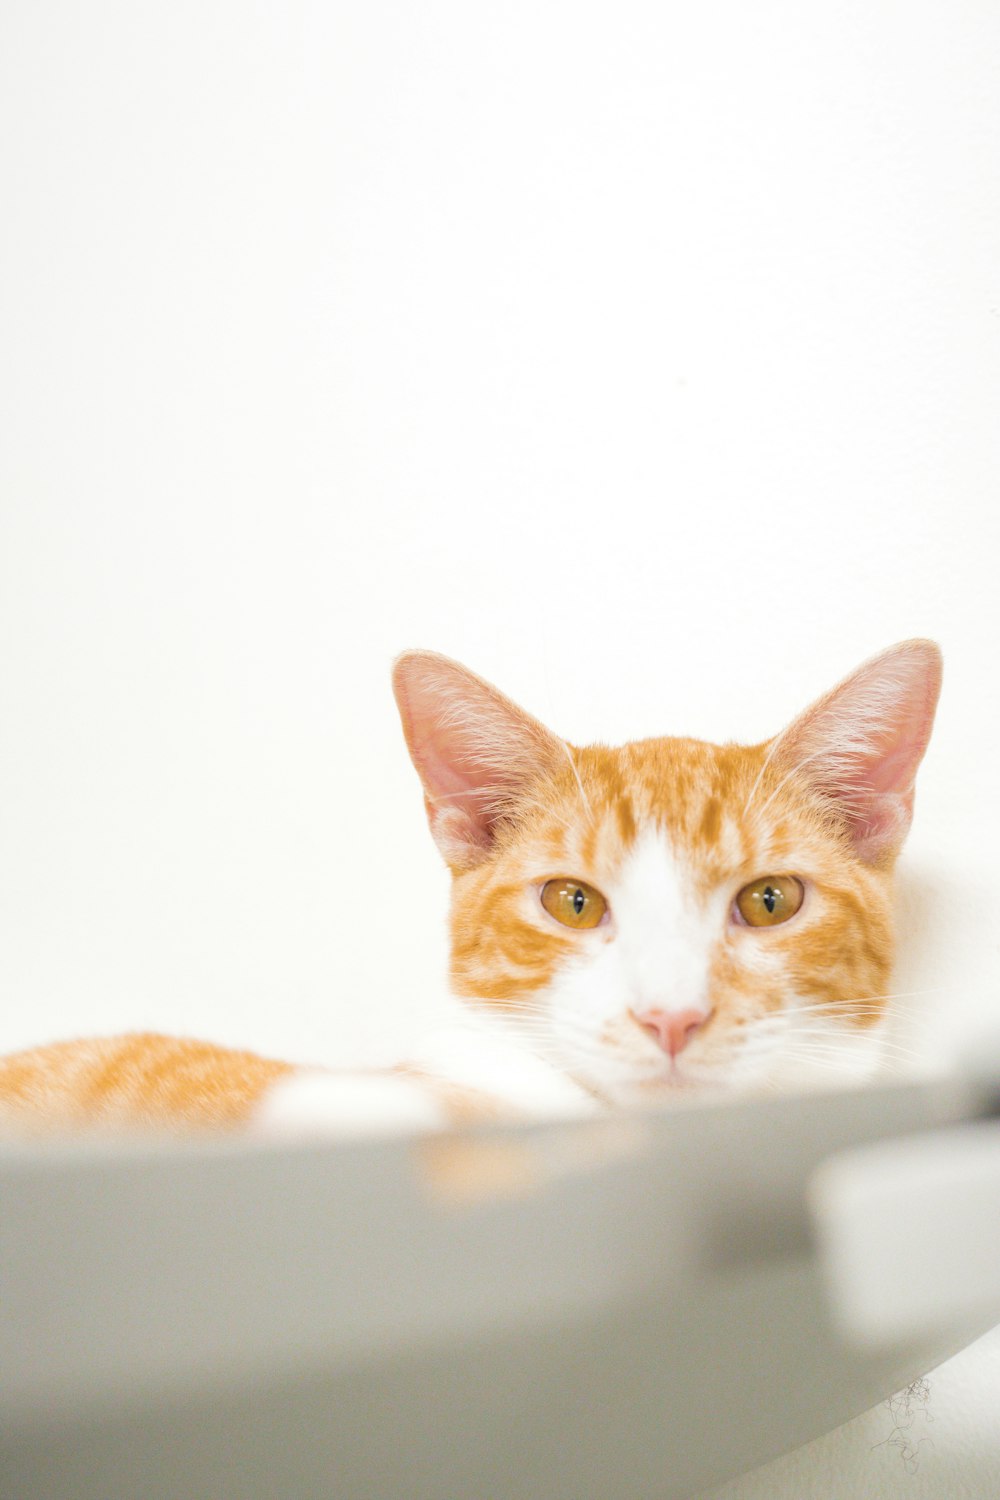 an orange and white cat sitting in a bath tub